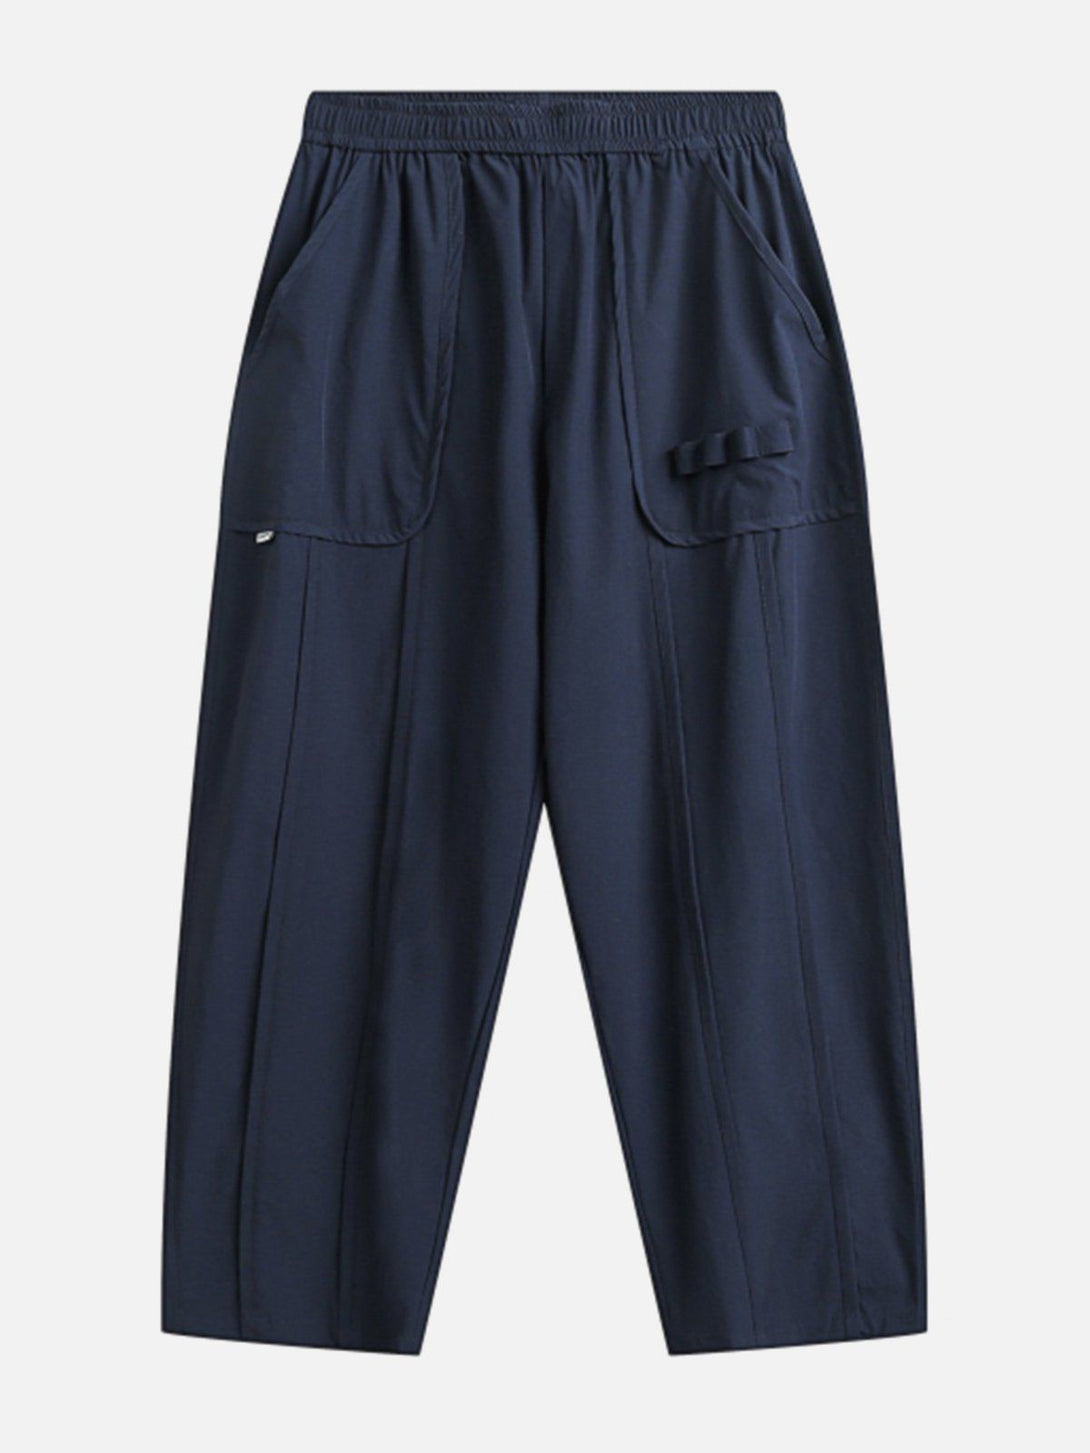 Majesda® - Three-dimensional Tailoring Design Cargo Pants outfit ideas streetwear fashion